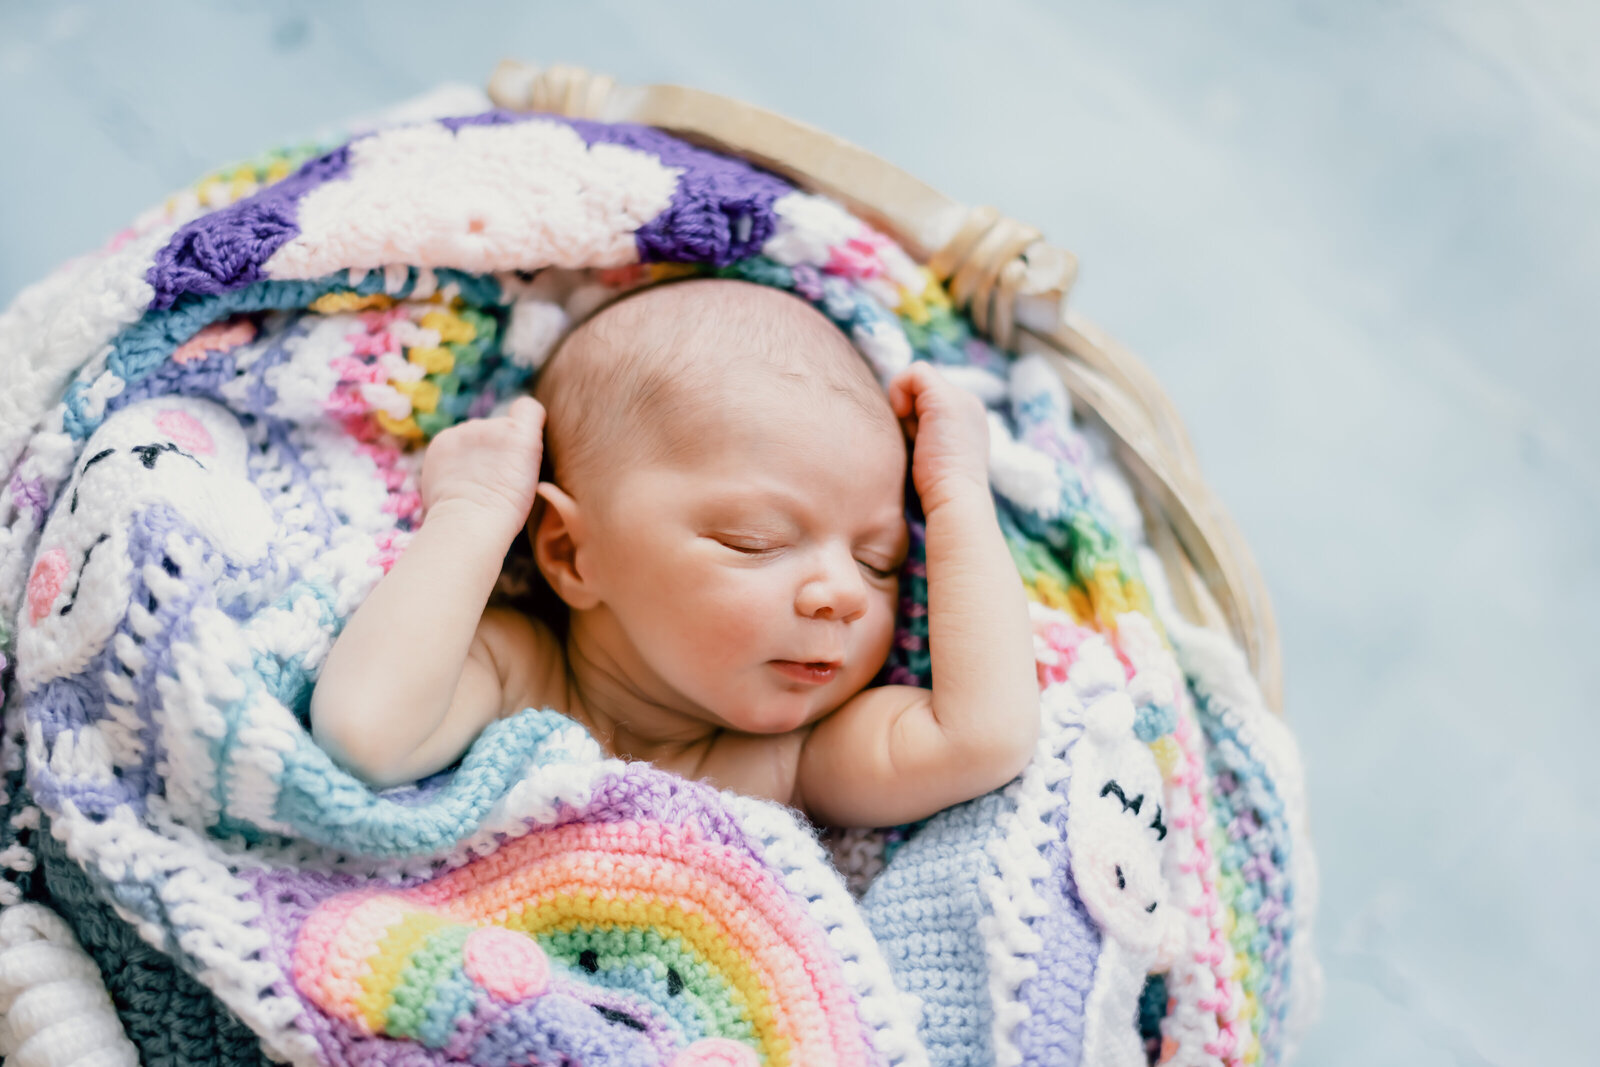 Kate-Stuart-Photography-Newborn-Photography-5359